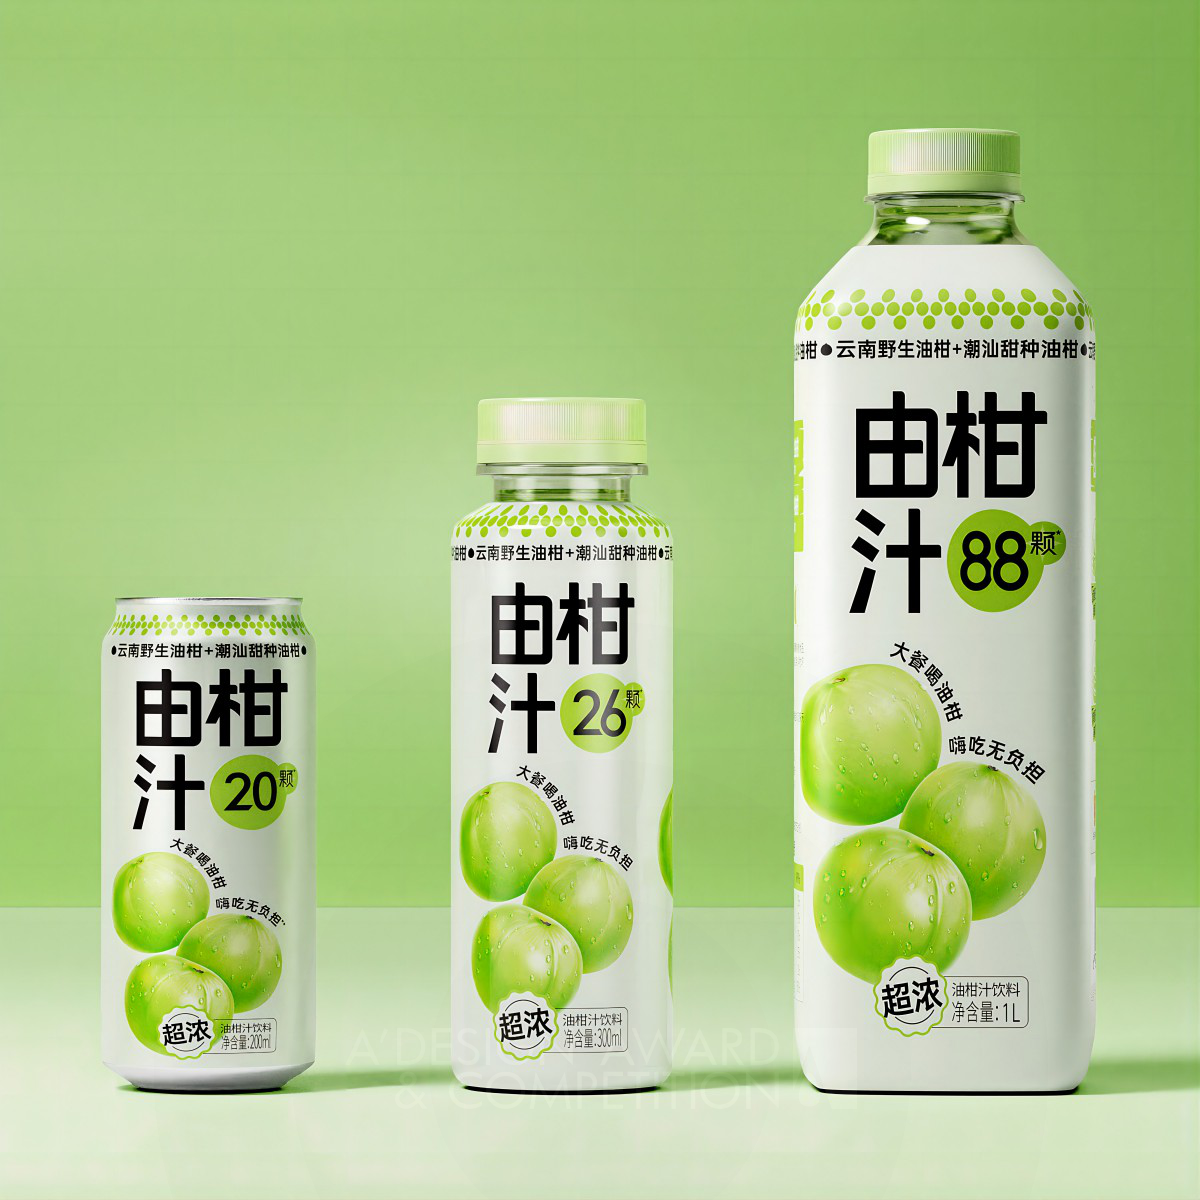 Eastroc Amla Juice Beverage Packaging by Jianchao Chen